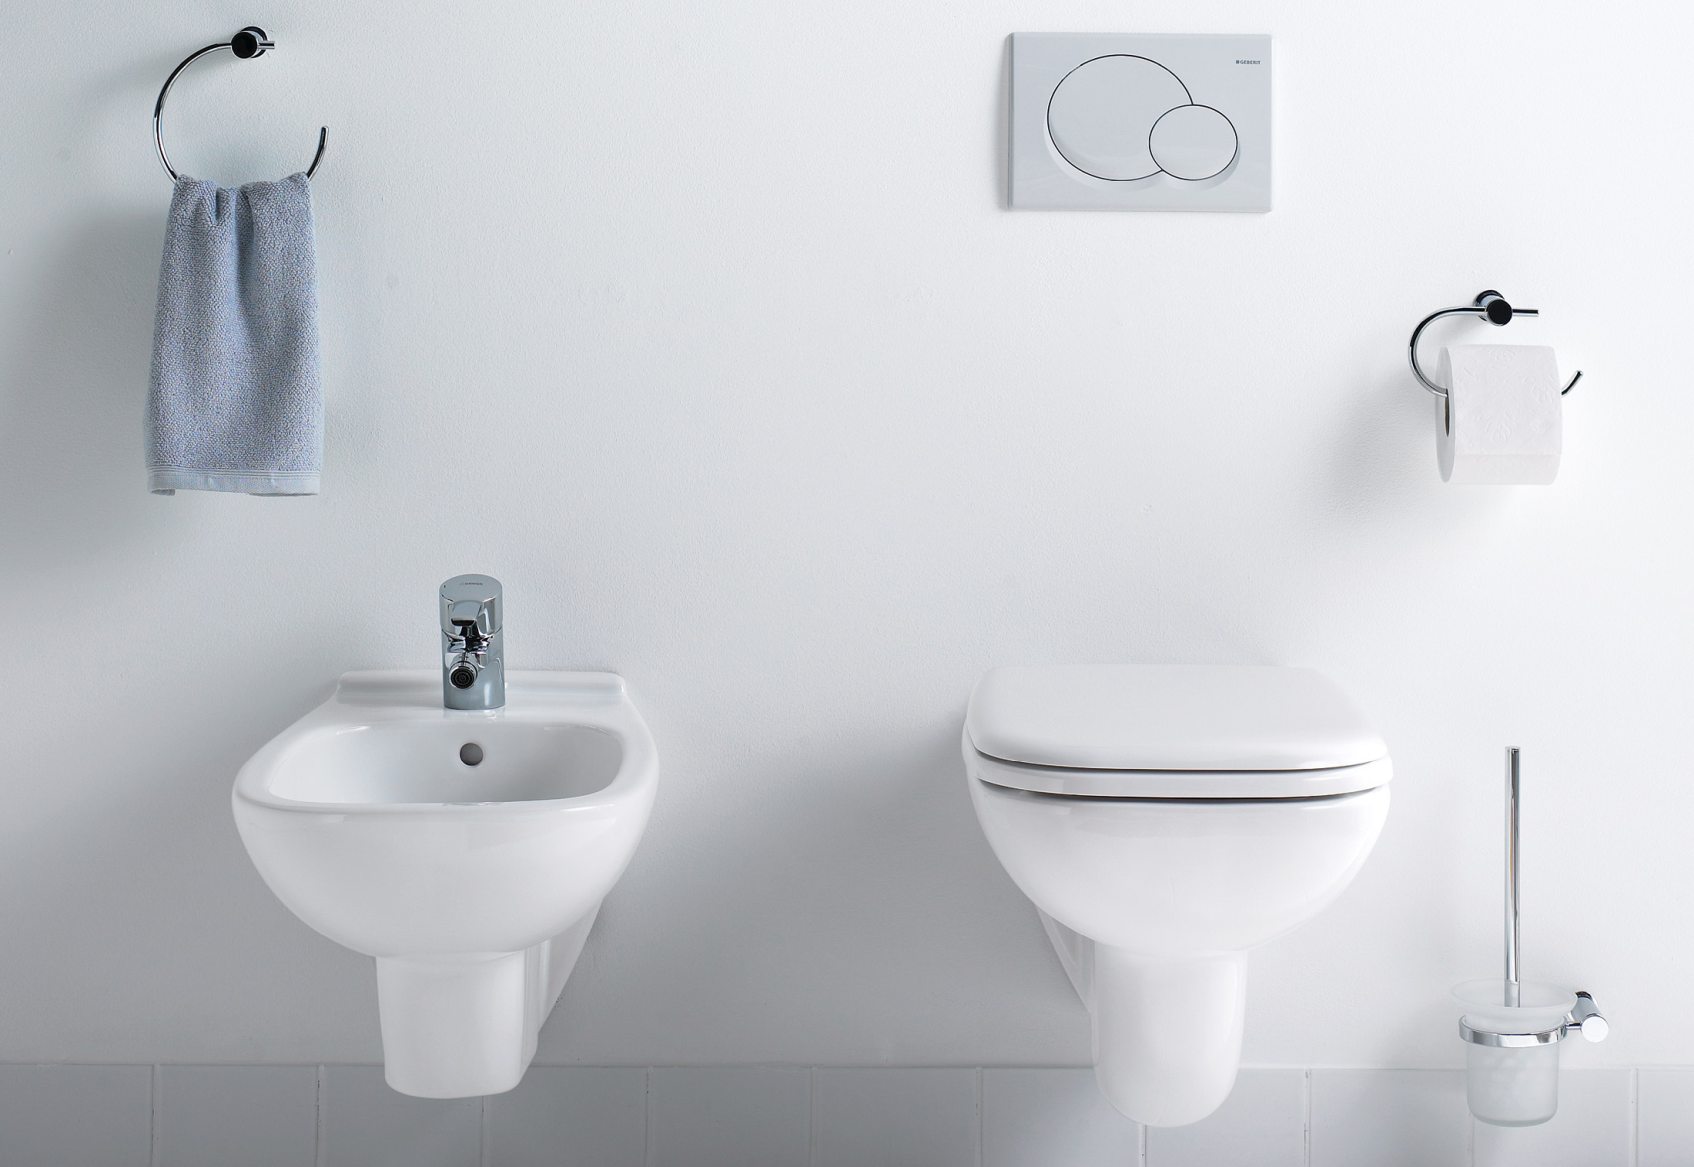 Duravit D-Code toaleta, miska WC Duravit, bidet Duravit D-Code, łazienka nowoczesna – wyposażenie łazienek lazienkarium.pl